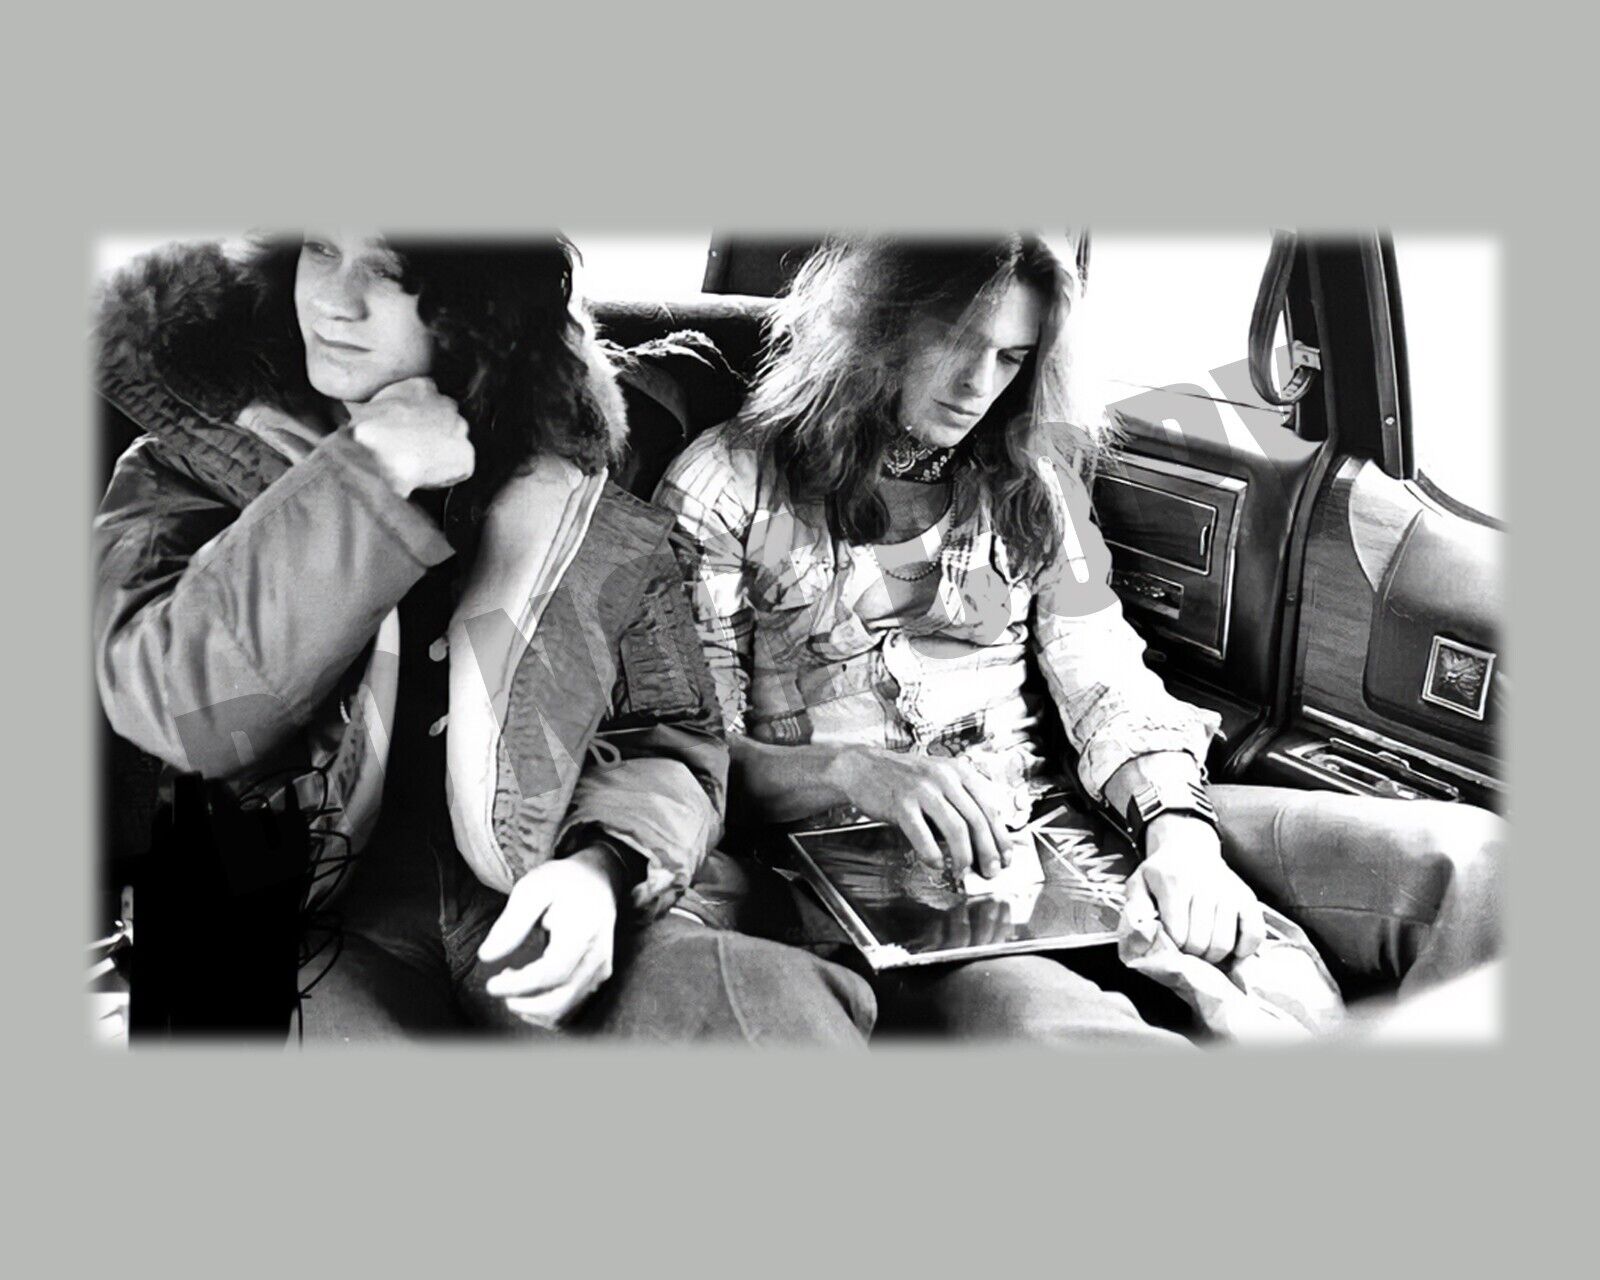 Eddie Van Halen David Lee Roth Riding In The Back Of Limo 8x10 Photo